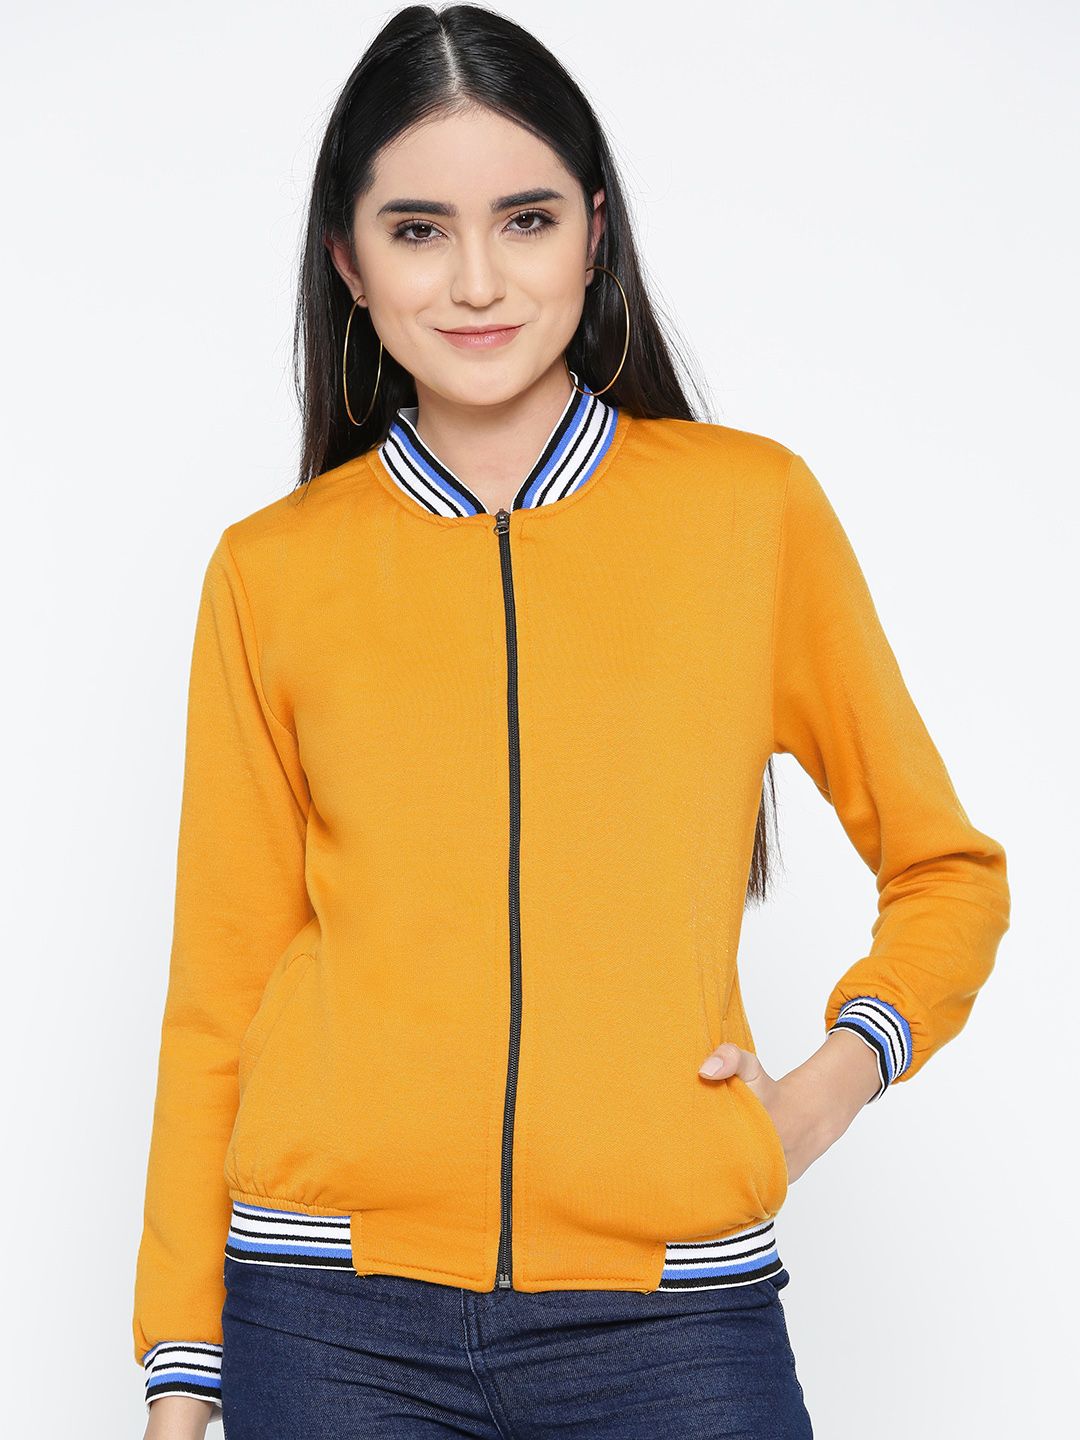 Belle Fille Women Mustard Yellow Solid Varsity Jacket Price in India